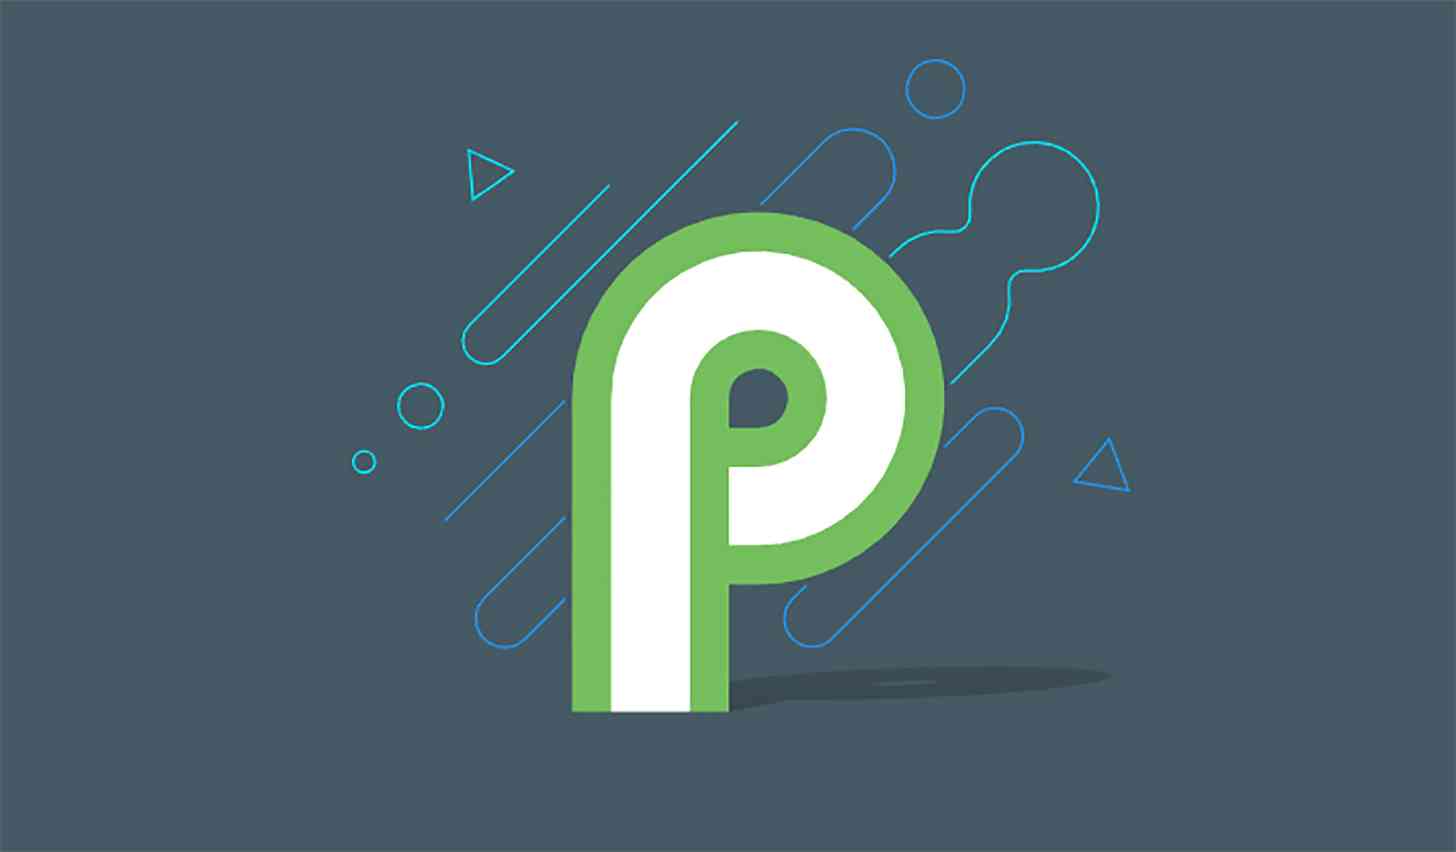 Android P logo gray